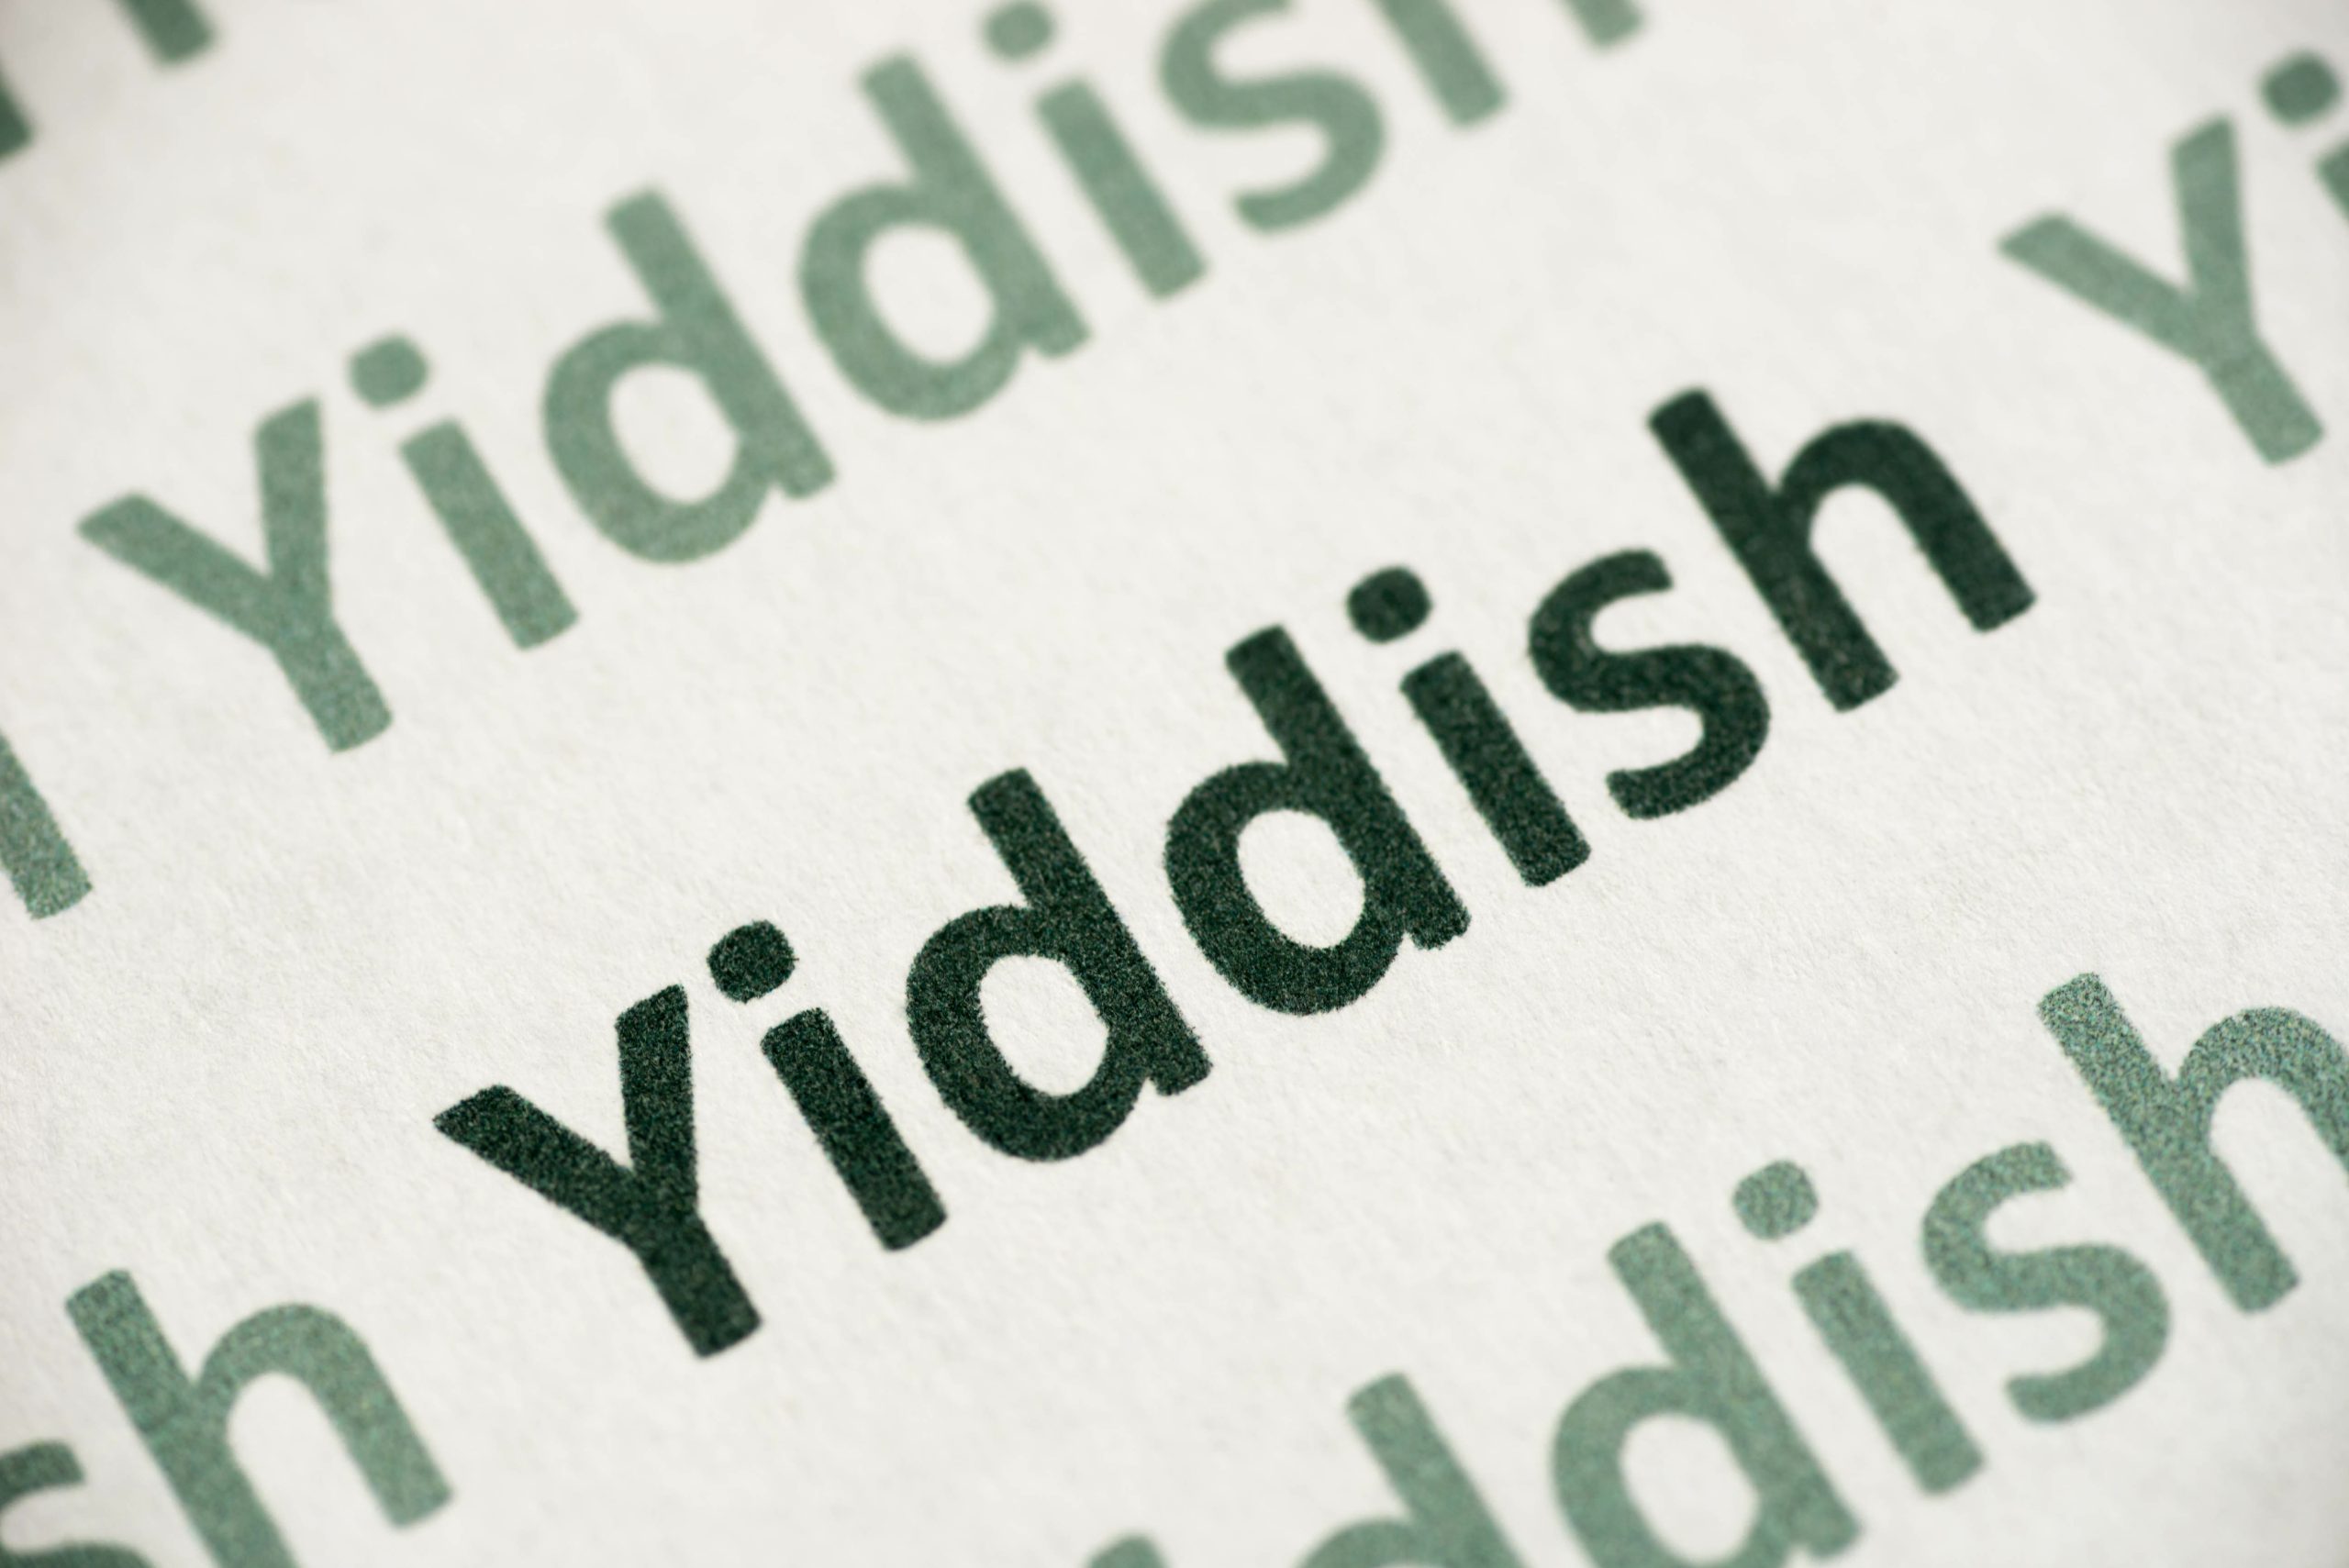 Yiddish Interpreting & Translation Services